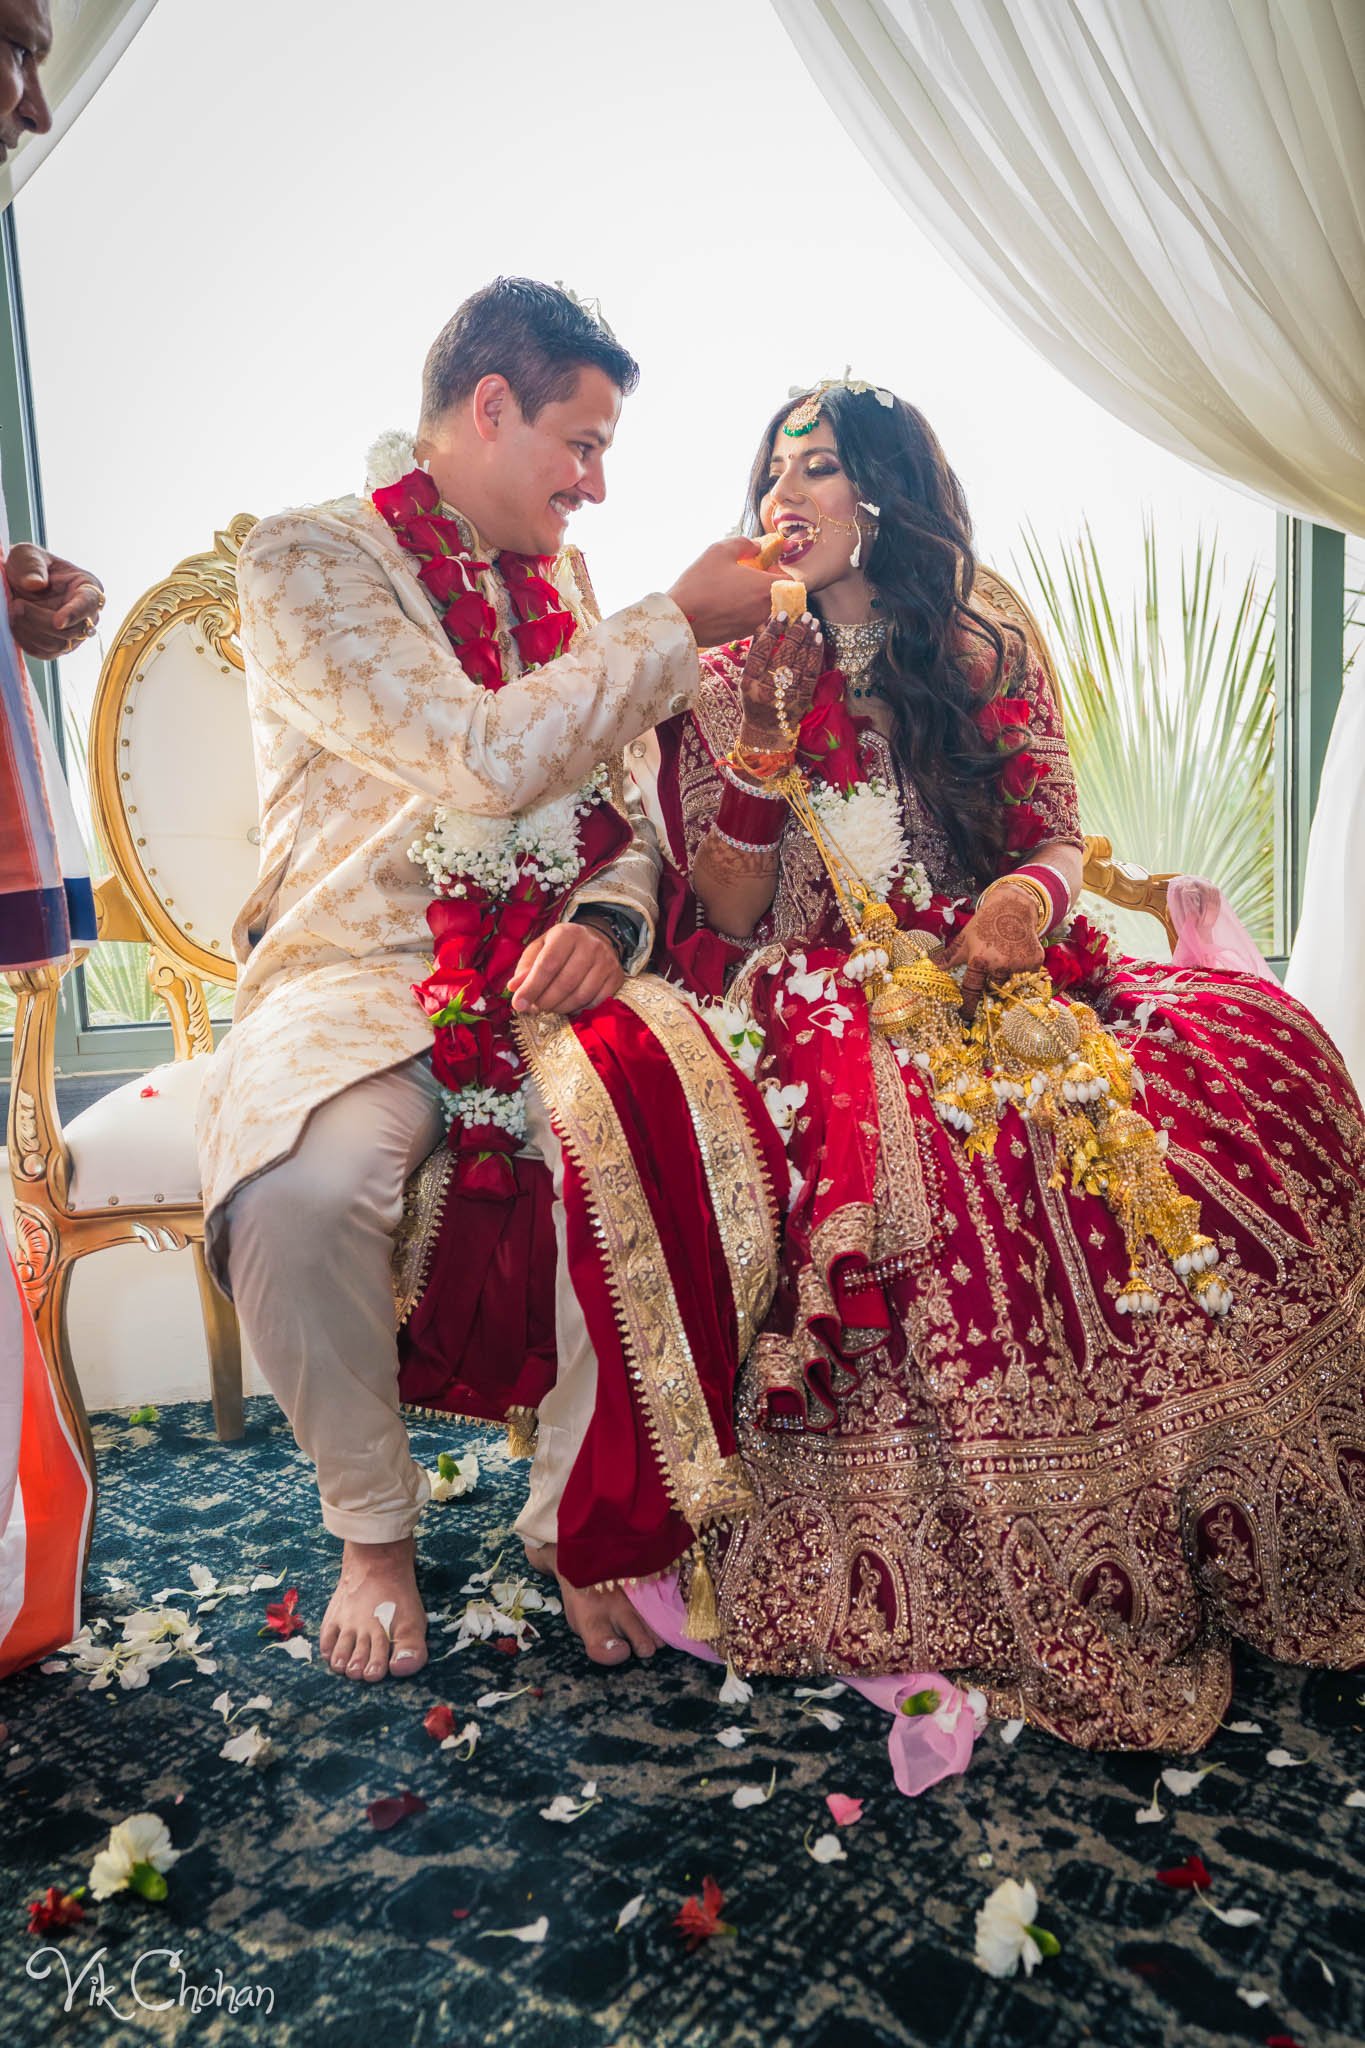 2022-06-09-Annie-&-Steven-Las-Vegas-Indian-Wedding-Ceremony-Photography-Vik-Chohan-Photography-Photo-Booth-Social-Media-VCP-180.jpg